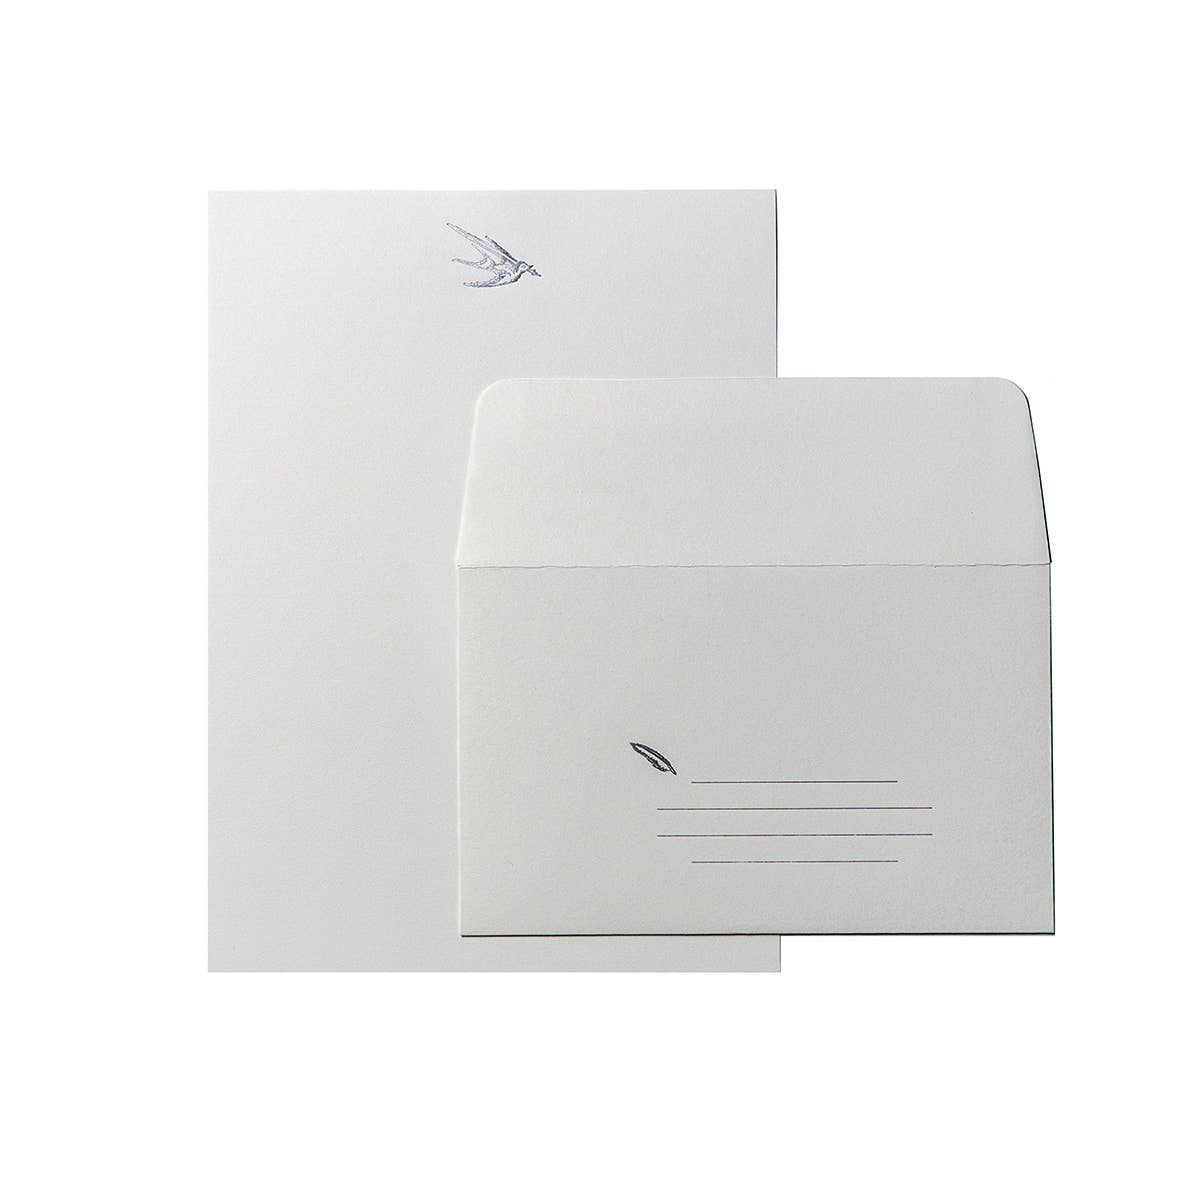 Bird With Pen Letterpress Letter Sheet Set